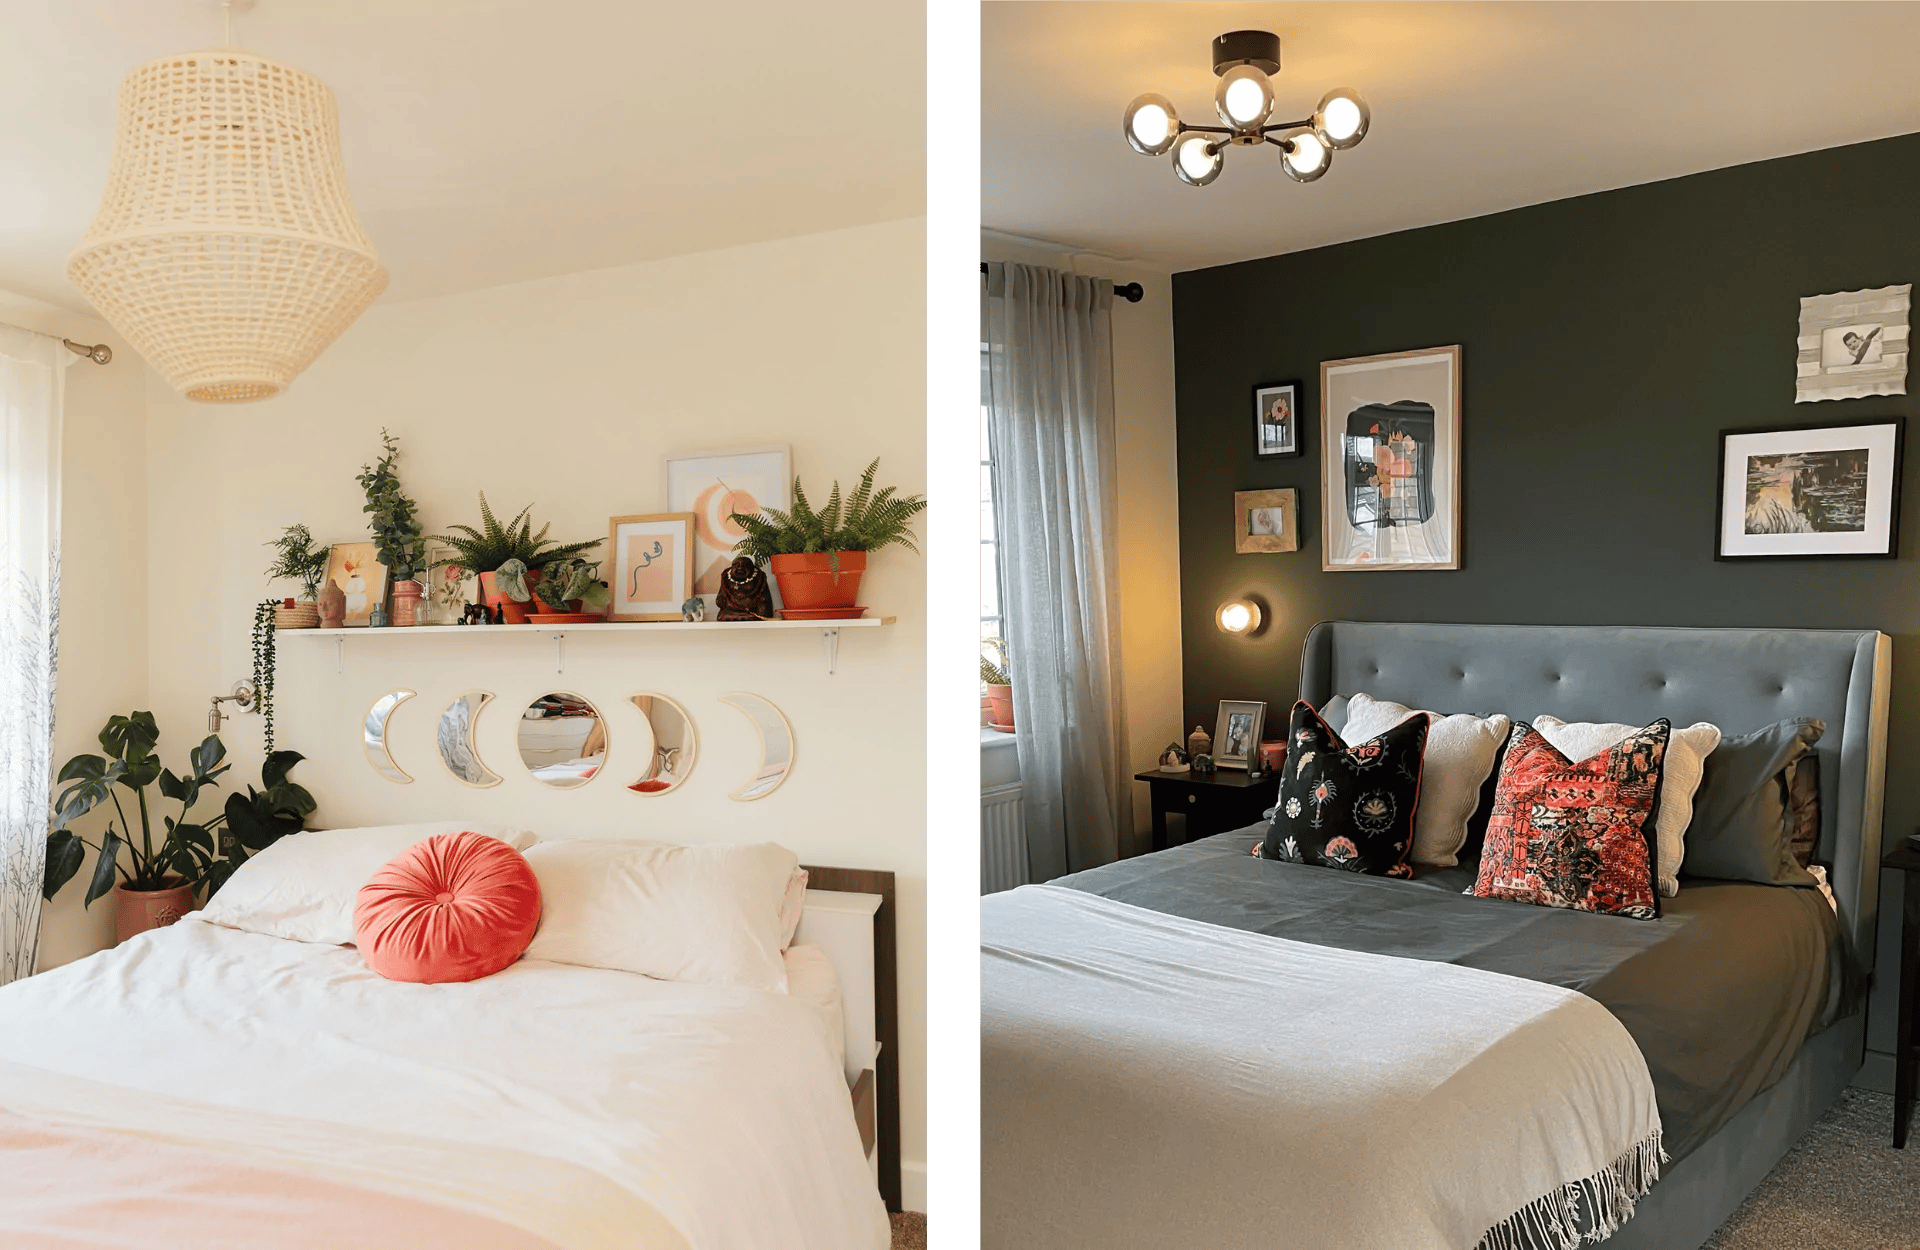 Light vs dark bedroom colour scheme